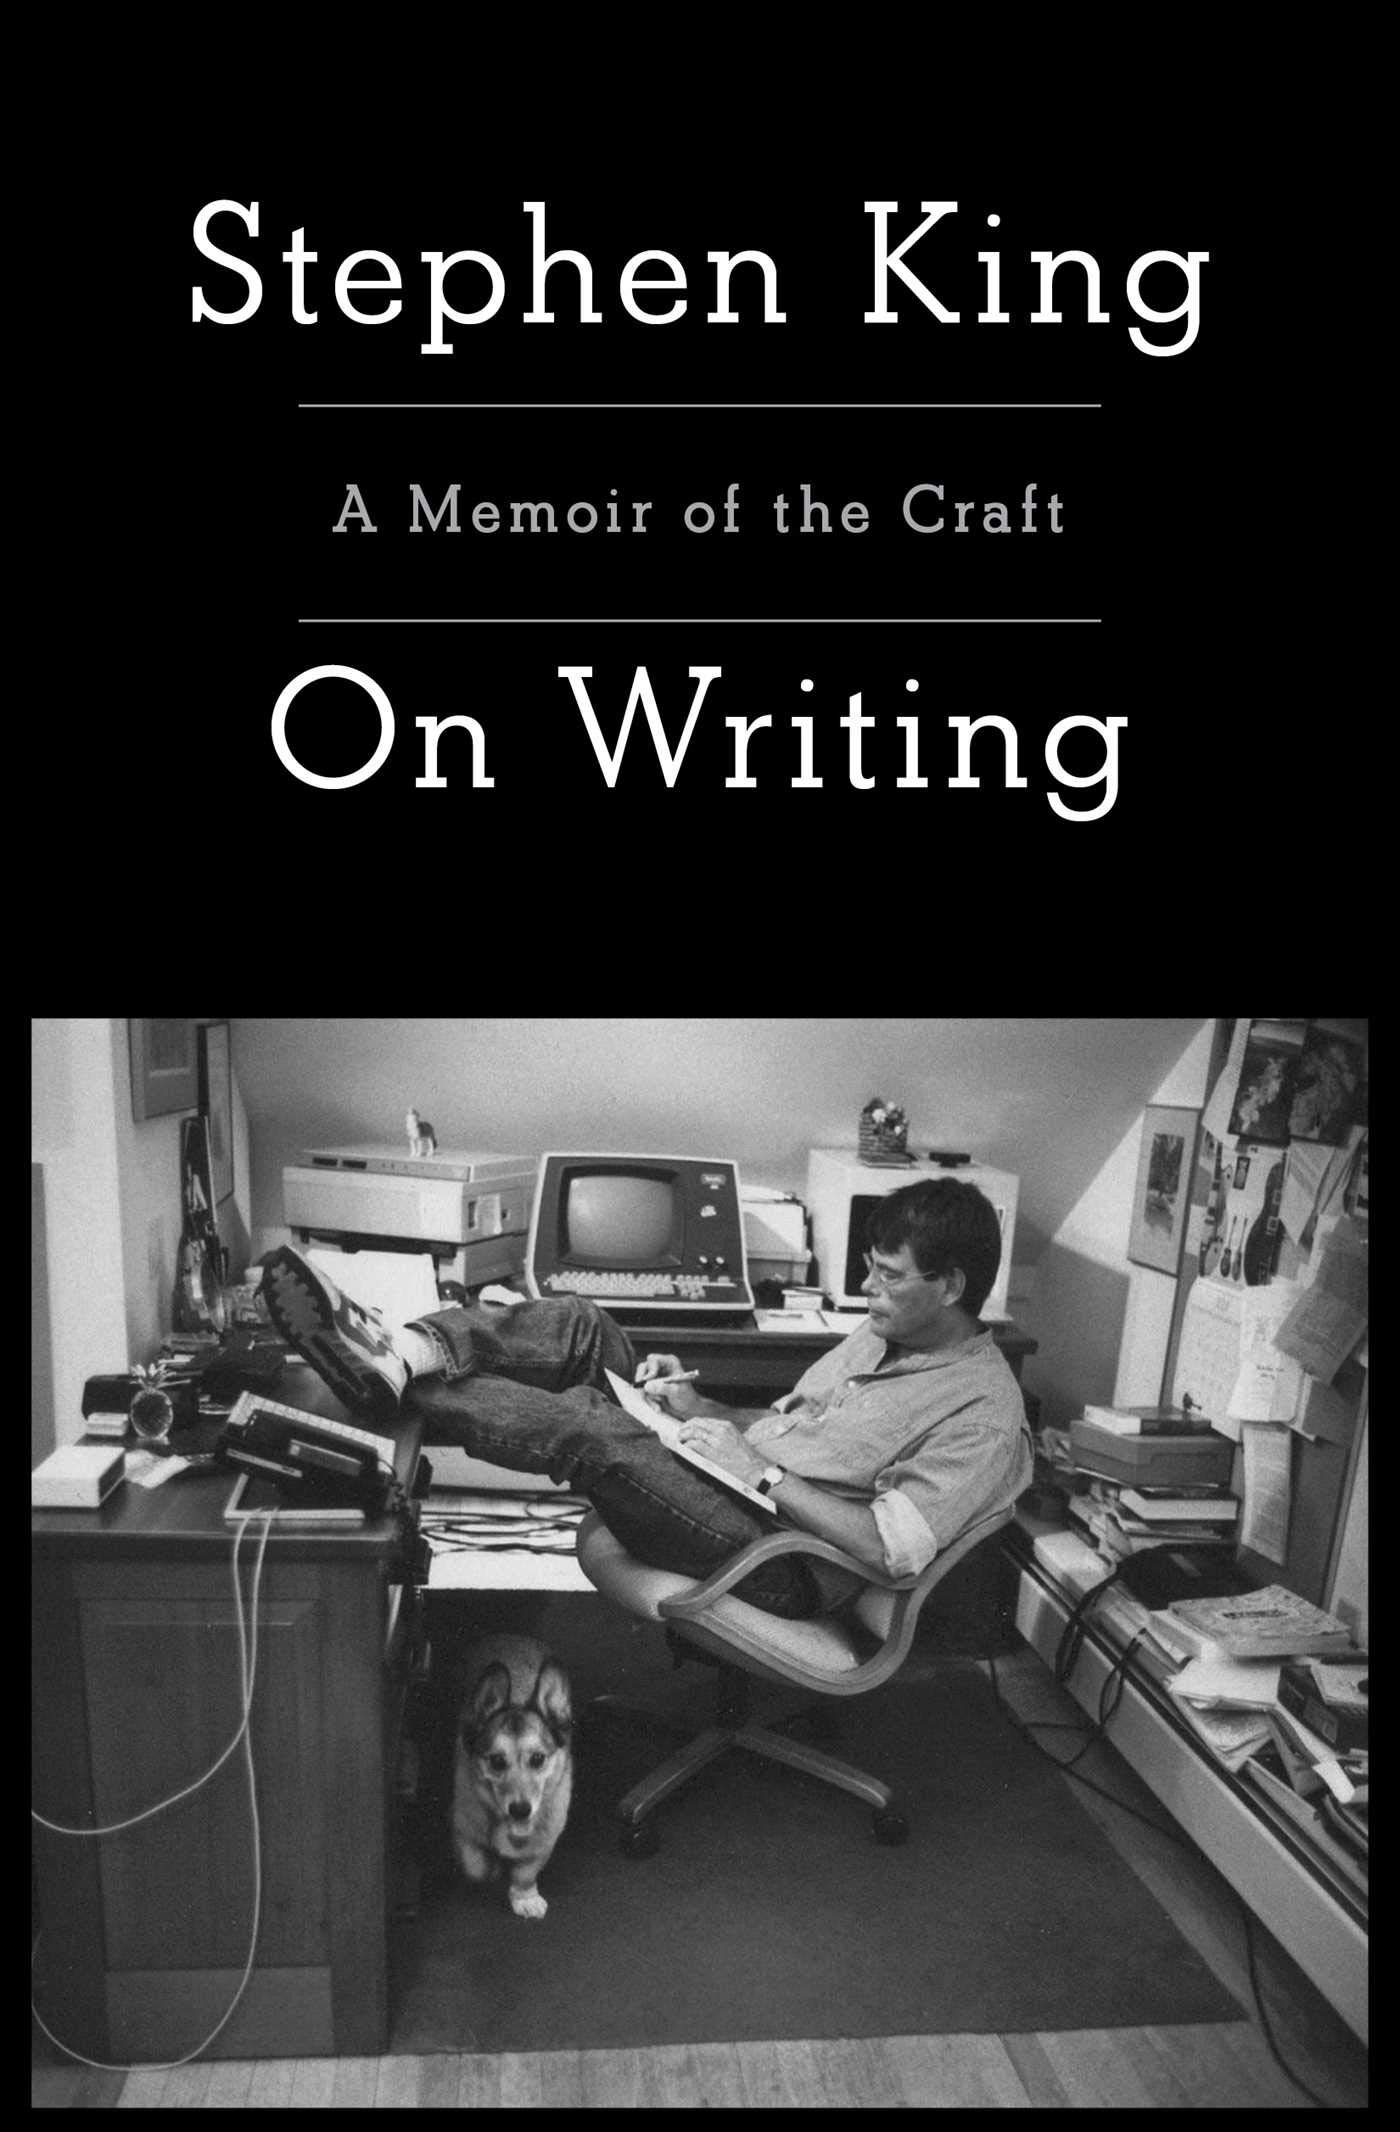 Stephen King’s On Writing